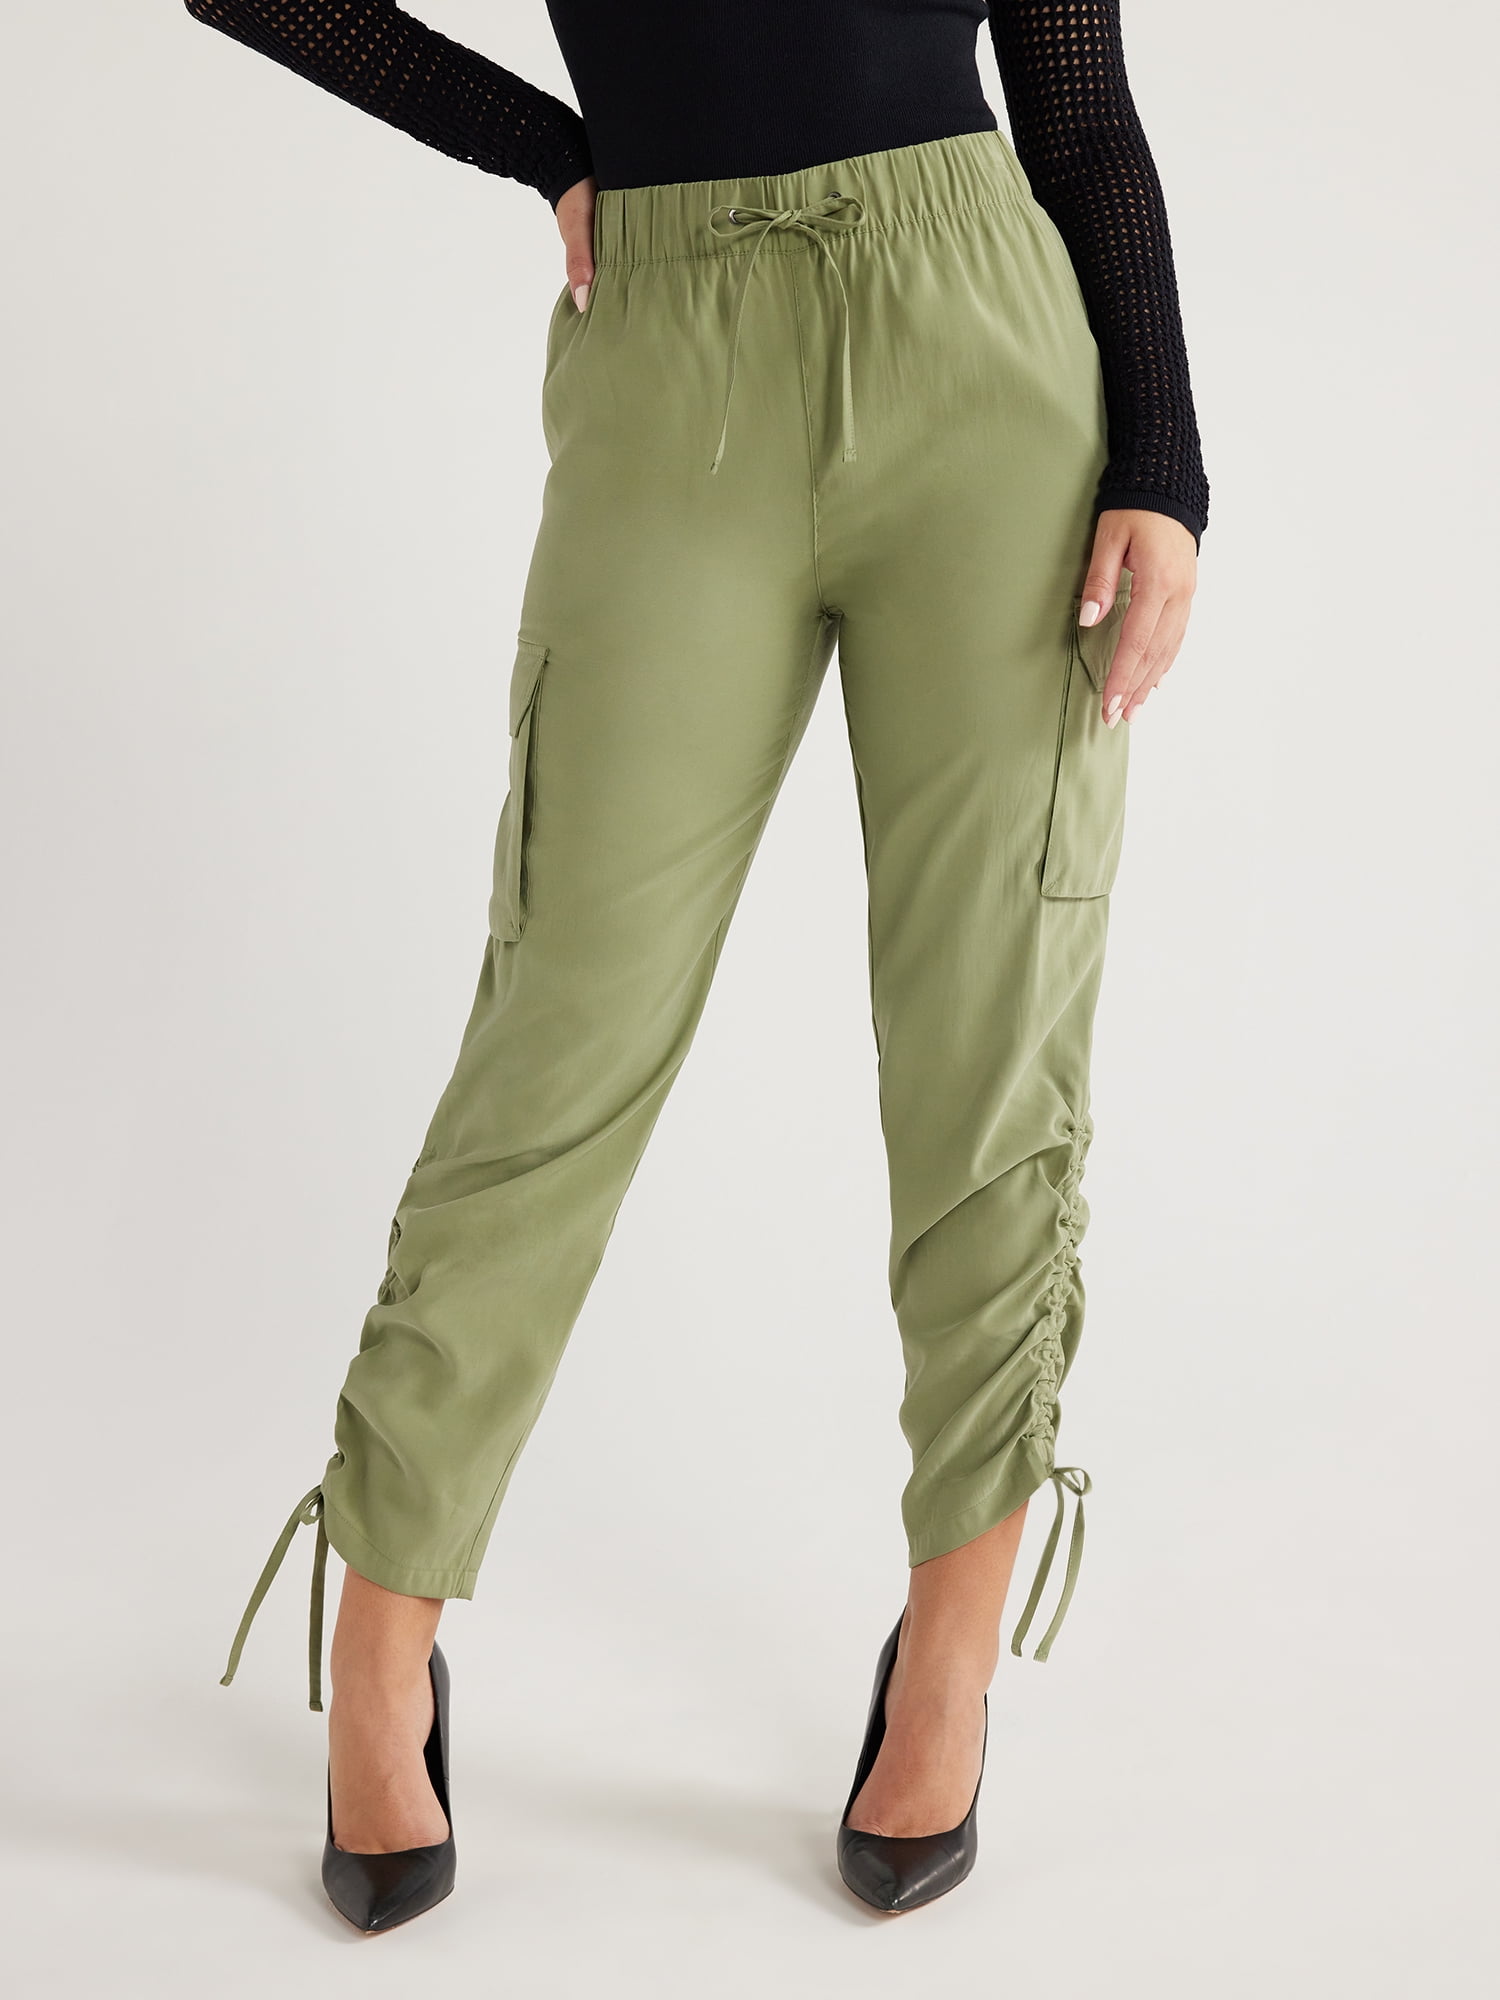 Sofia Jeans Women's Super High Rise Luxe Cargo Pants, 27 Inseam, Sizes  XXS-XXXL